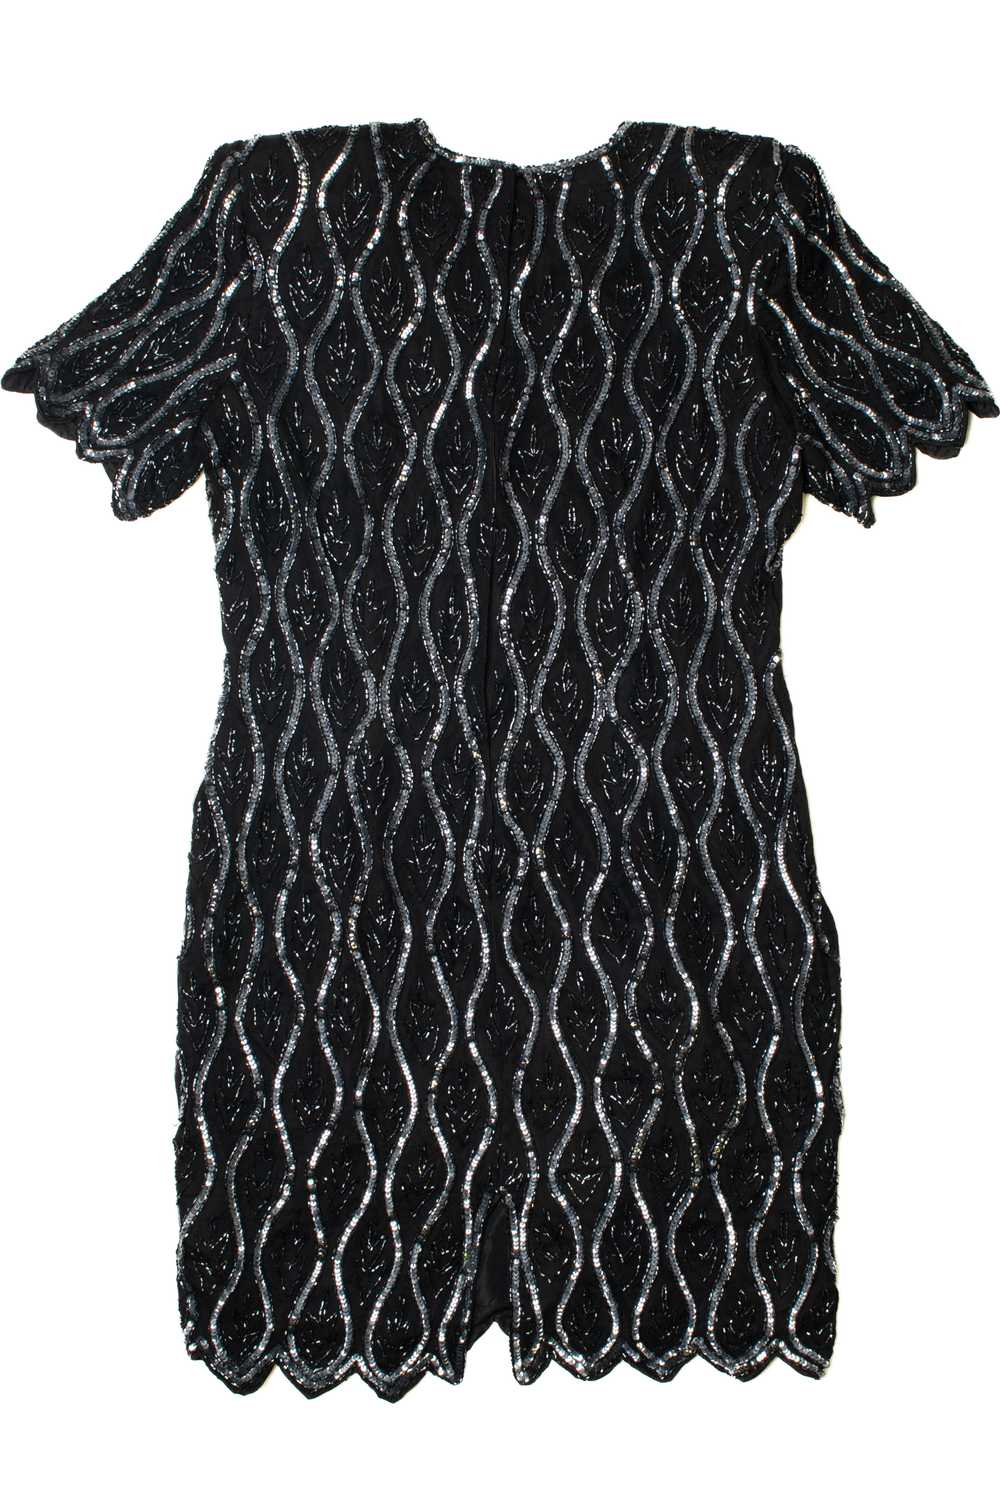 Vintage Beaded & Sequin Sténay Dress - image 2